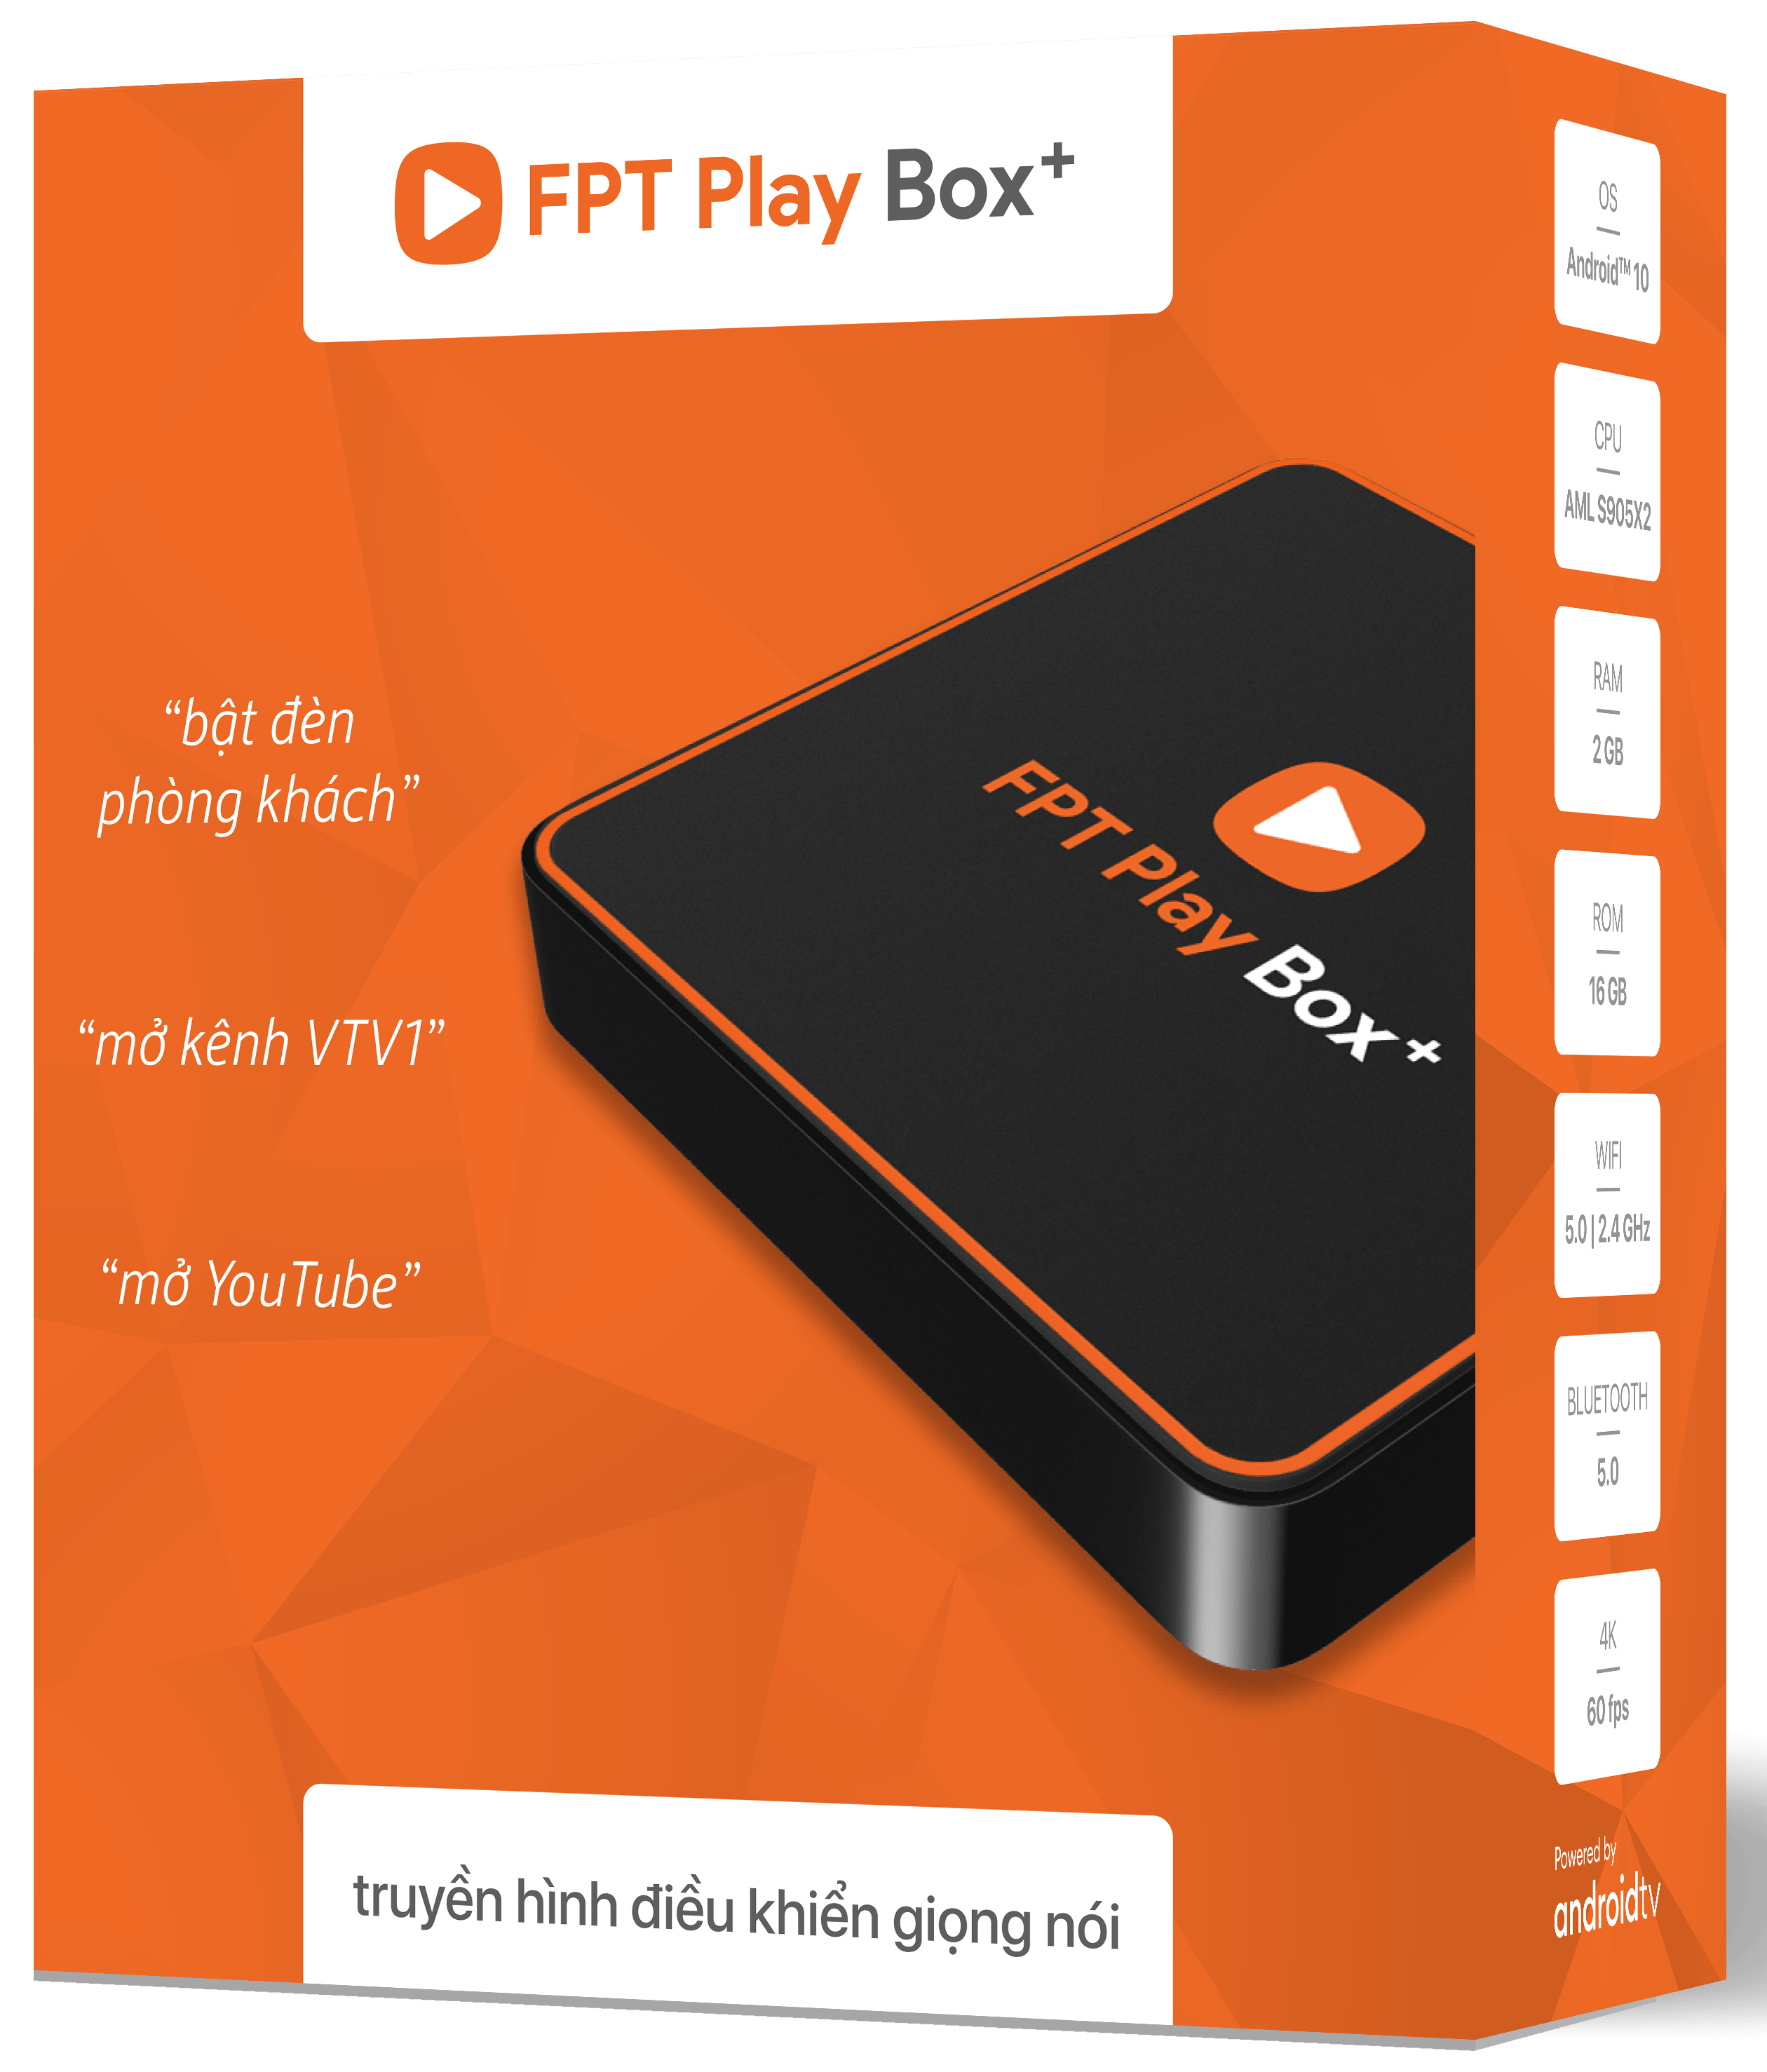 hop-box-fpt-play-box-2020-dichvufpttelecom